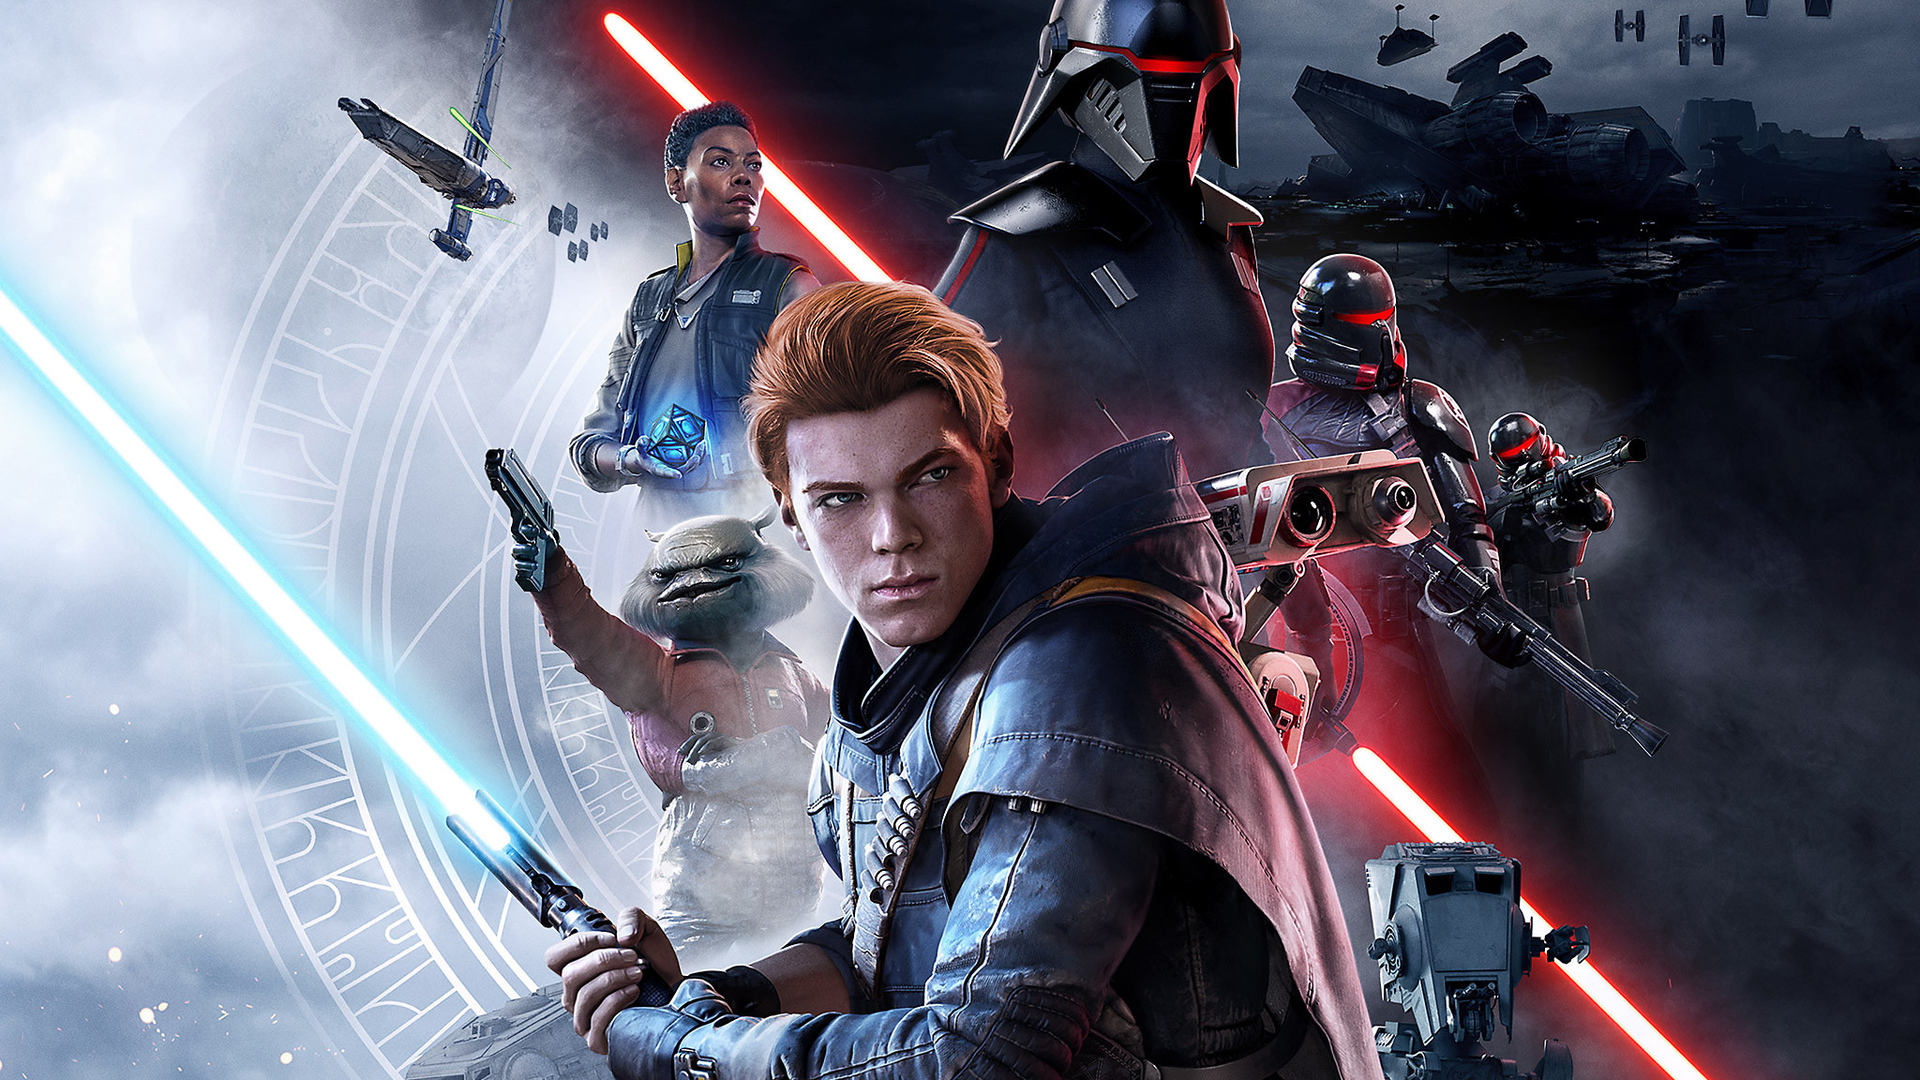 Star Wars Jedi: Survivor release date will be announced in December